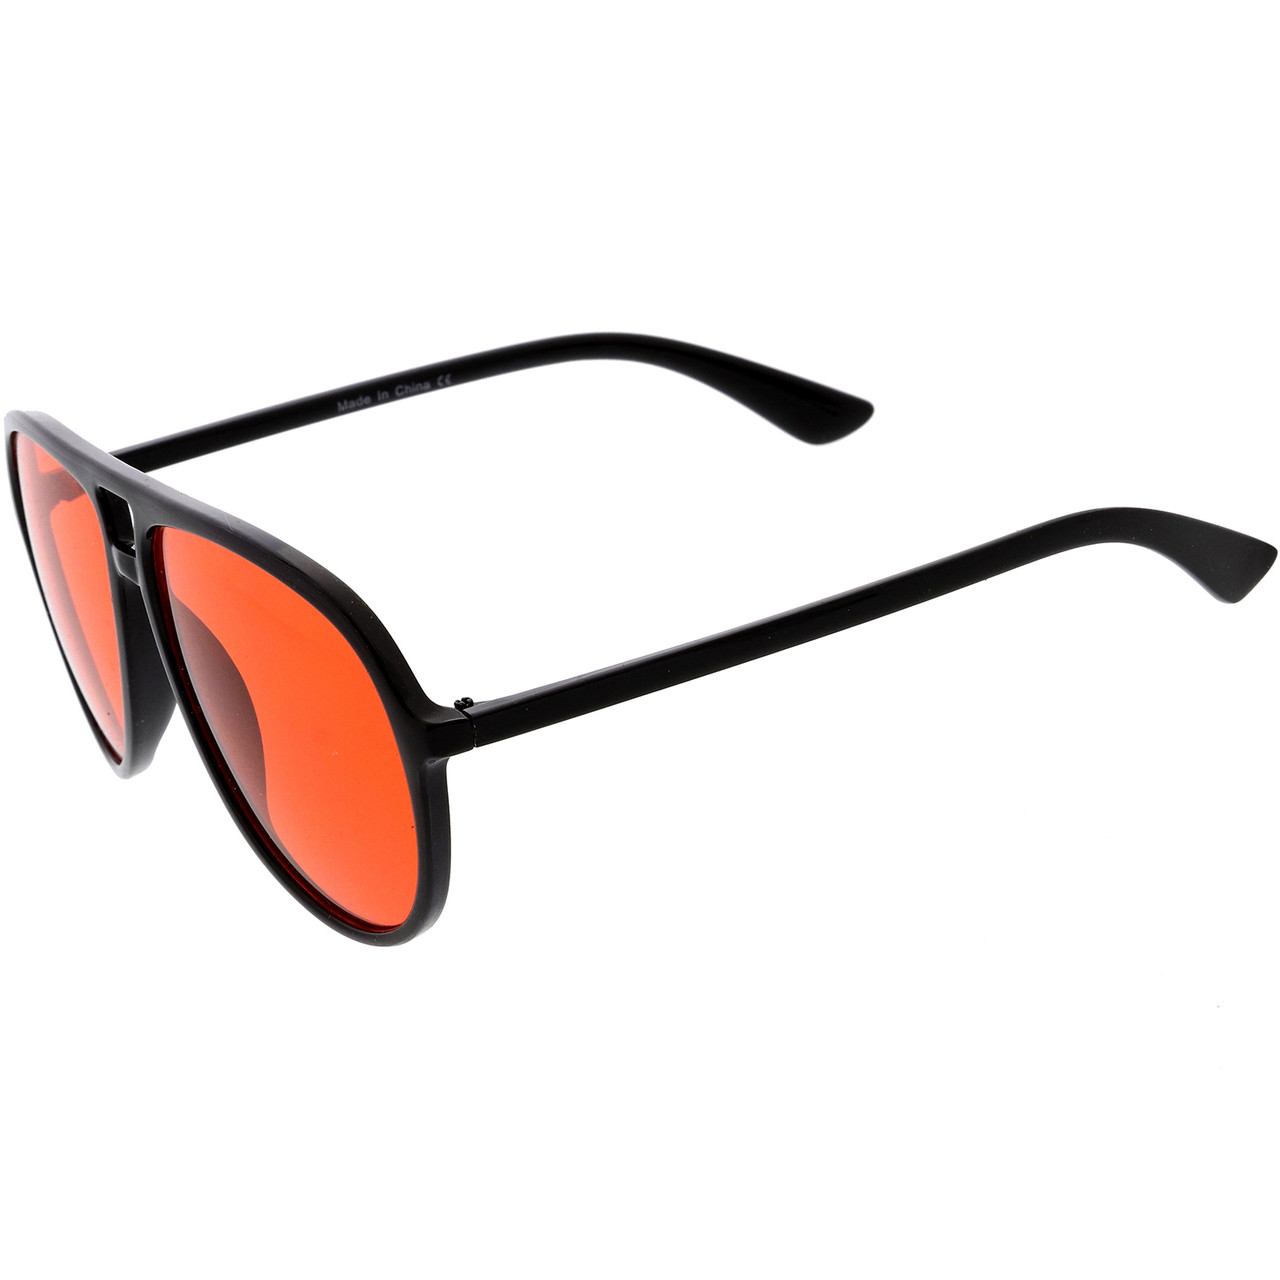 Classic 80s Inspired Lens Color Aviator 55mm Tinted Sunglasses Retro